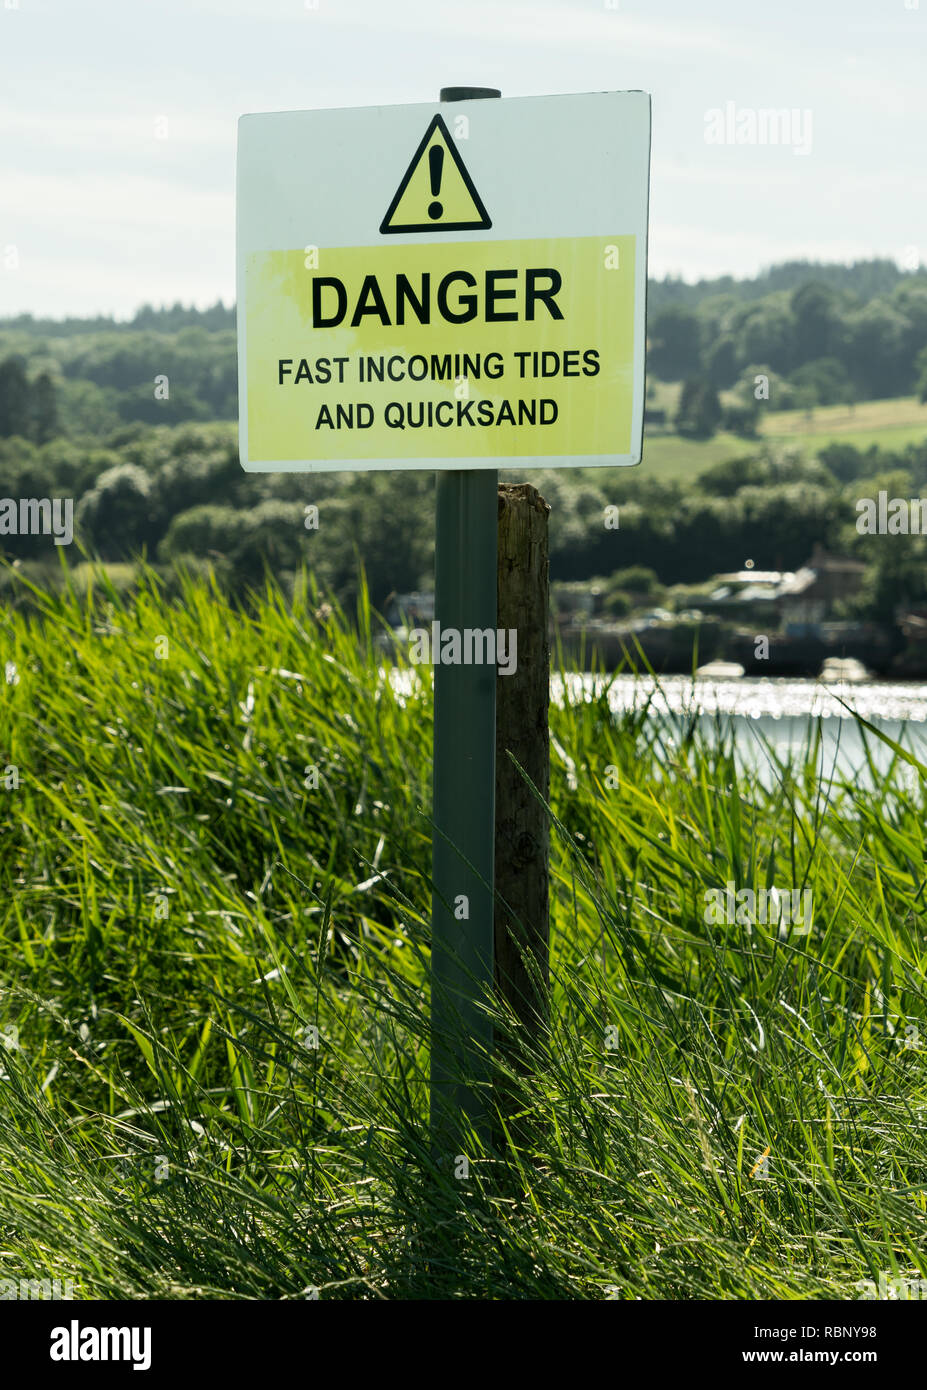 Danger - tides and quicksand, United Kingdom Stock Photo